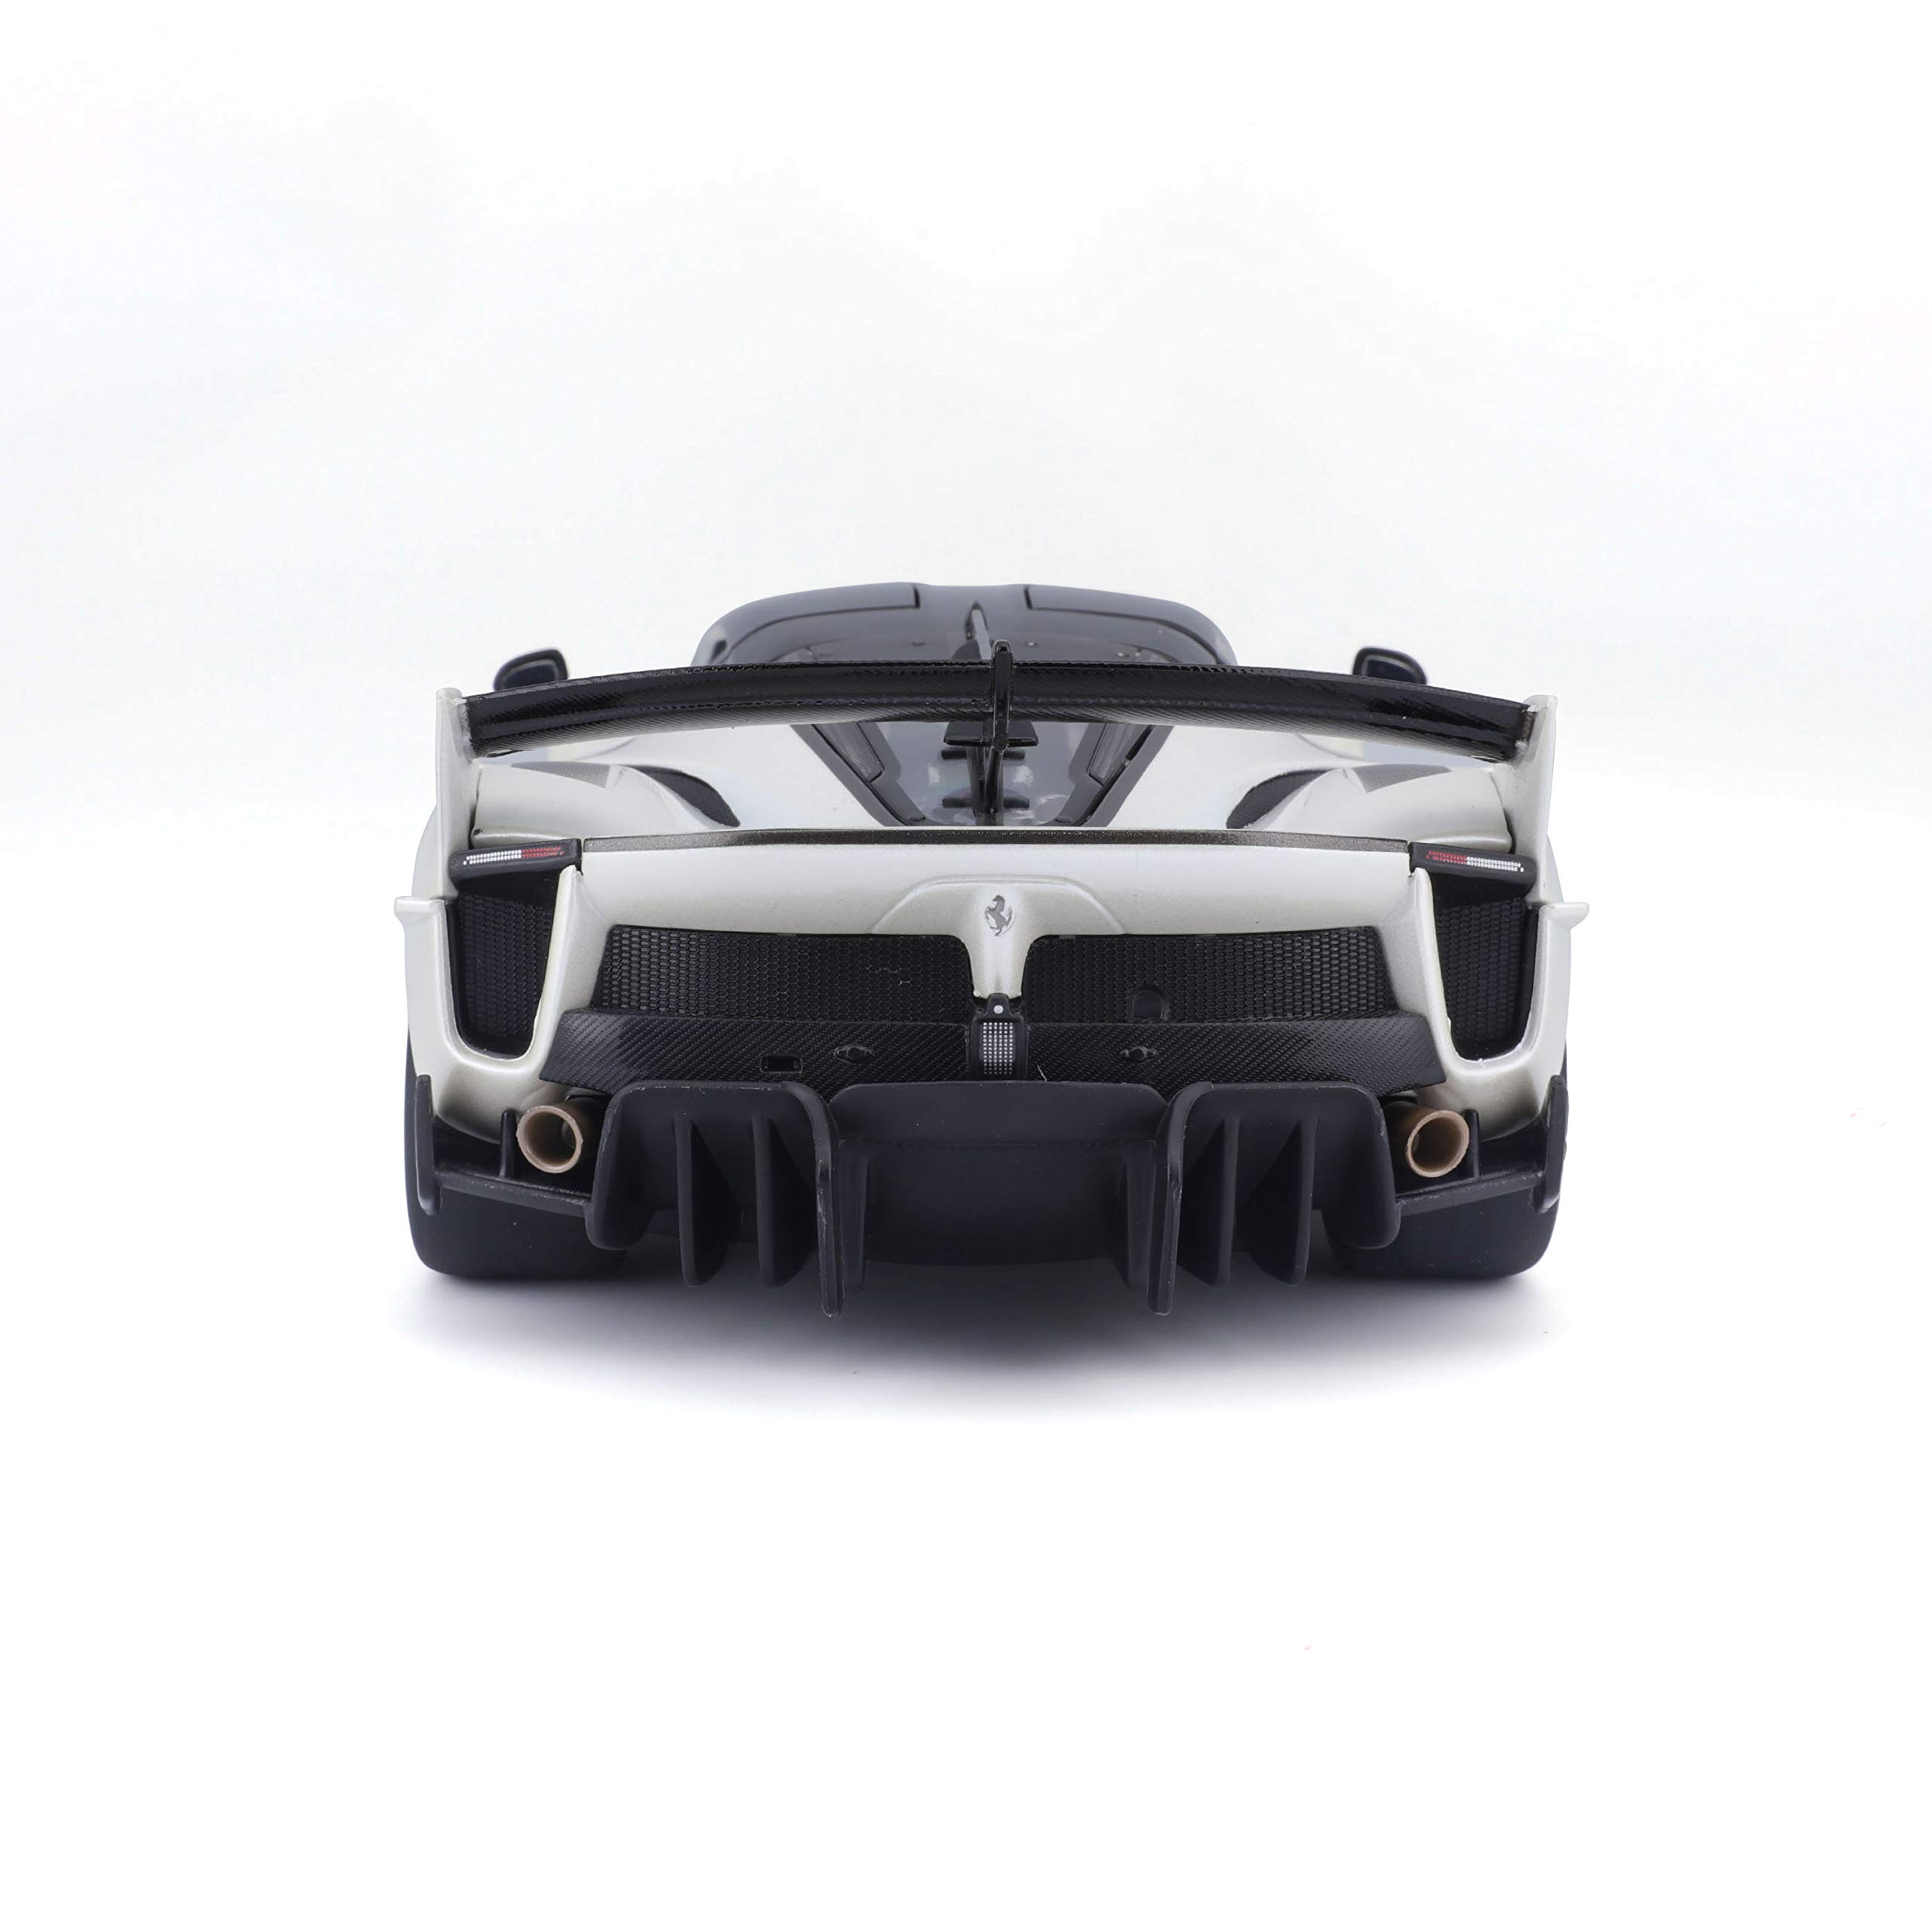 Bburago 1:18 Scale Race & Play Ferrari FXX K EVO Die Cast Vehicle